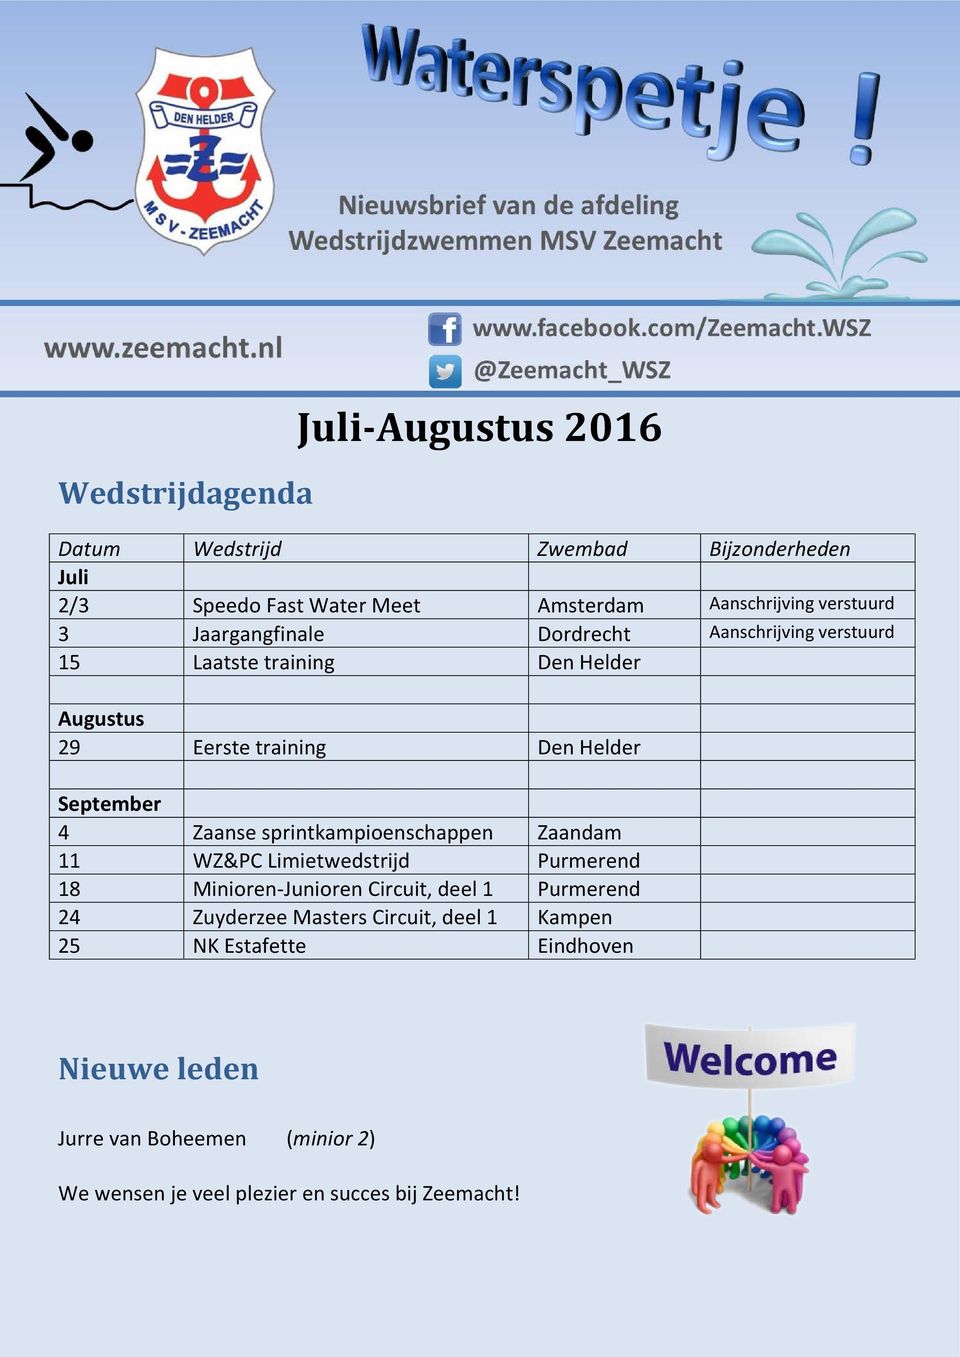 September 4 Zaanse sprintkampioenschappen Zaandam 11 WZ&PC Limietwedstrijd Purmerend 18 Minioren-Junioren Circuit, deel 1 Purmerend 24